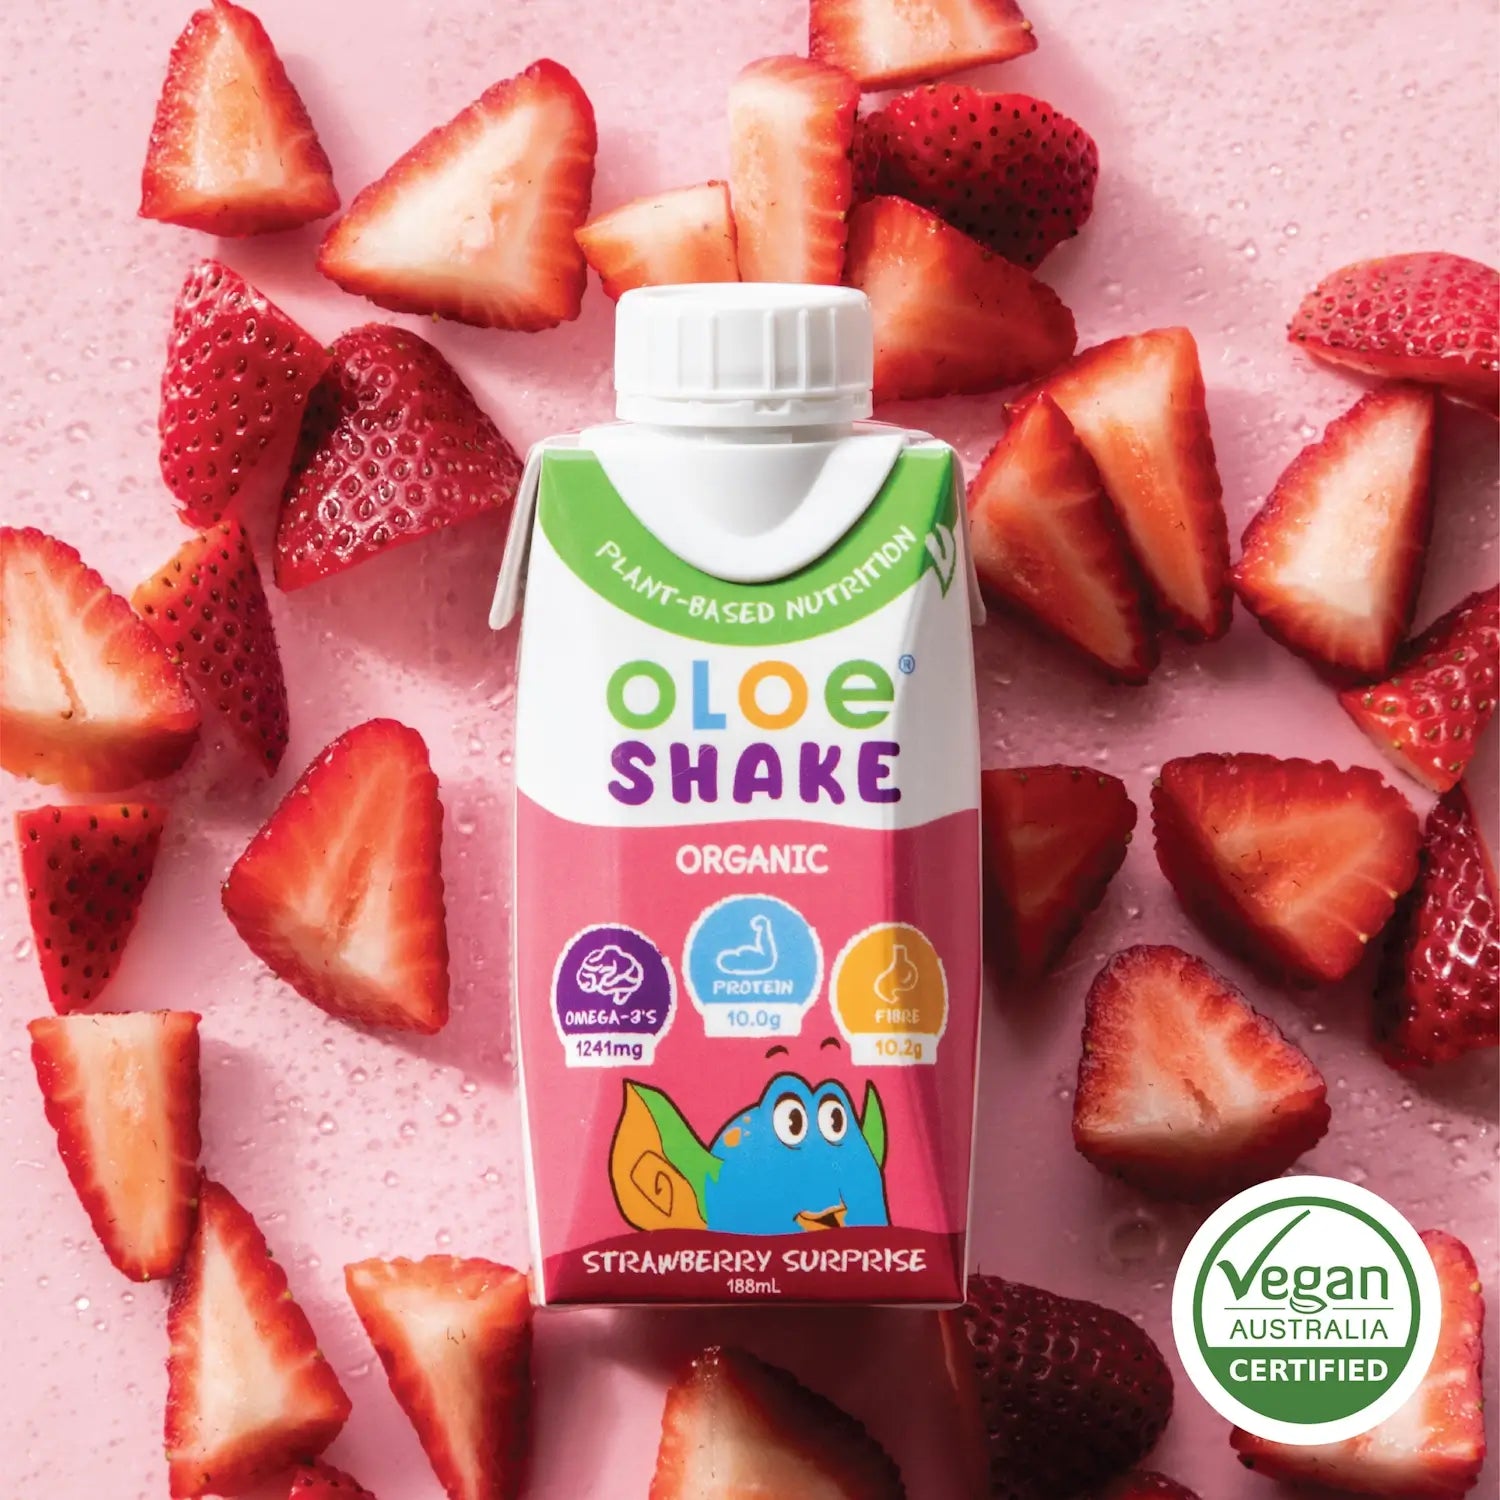 oloe-shake-strawberry-surprise-between-fresh-strawberries